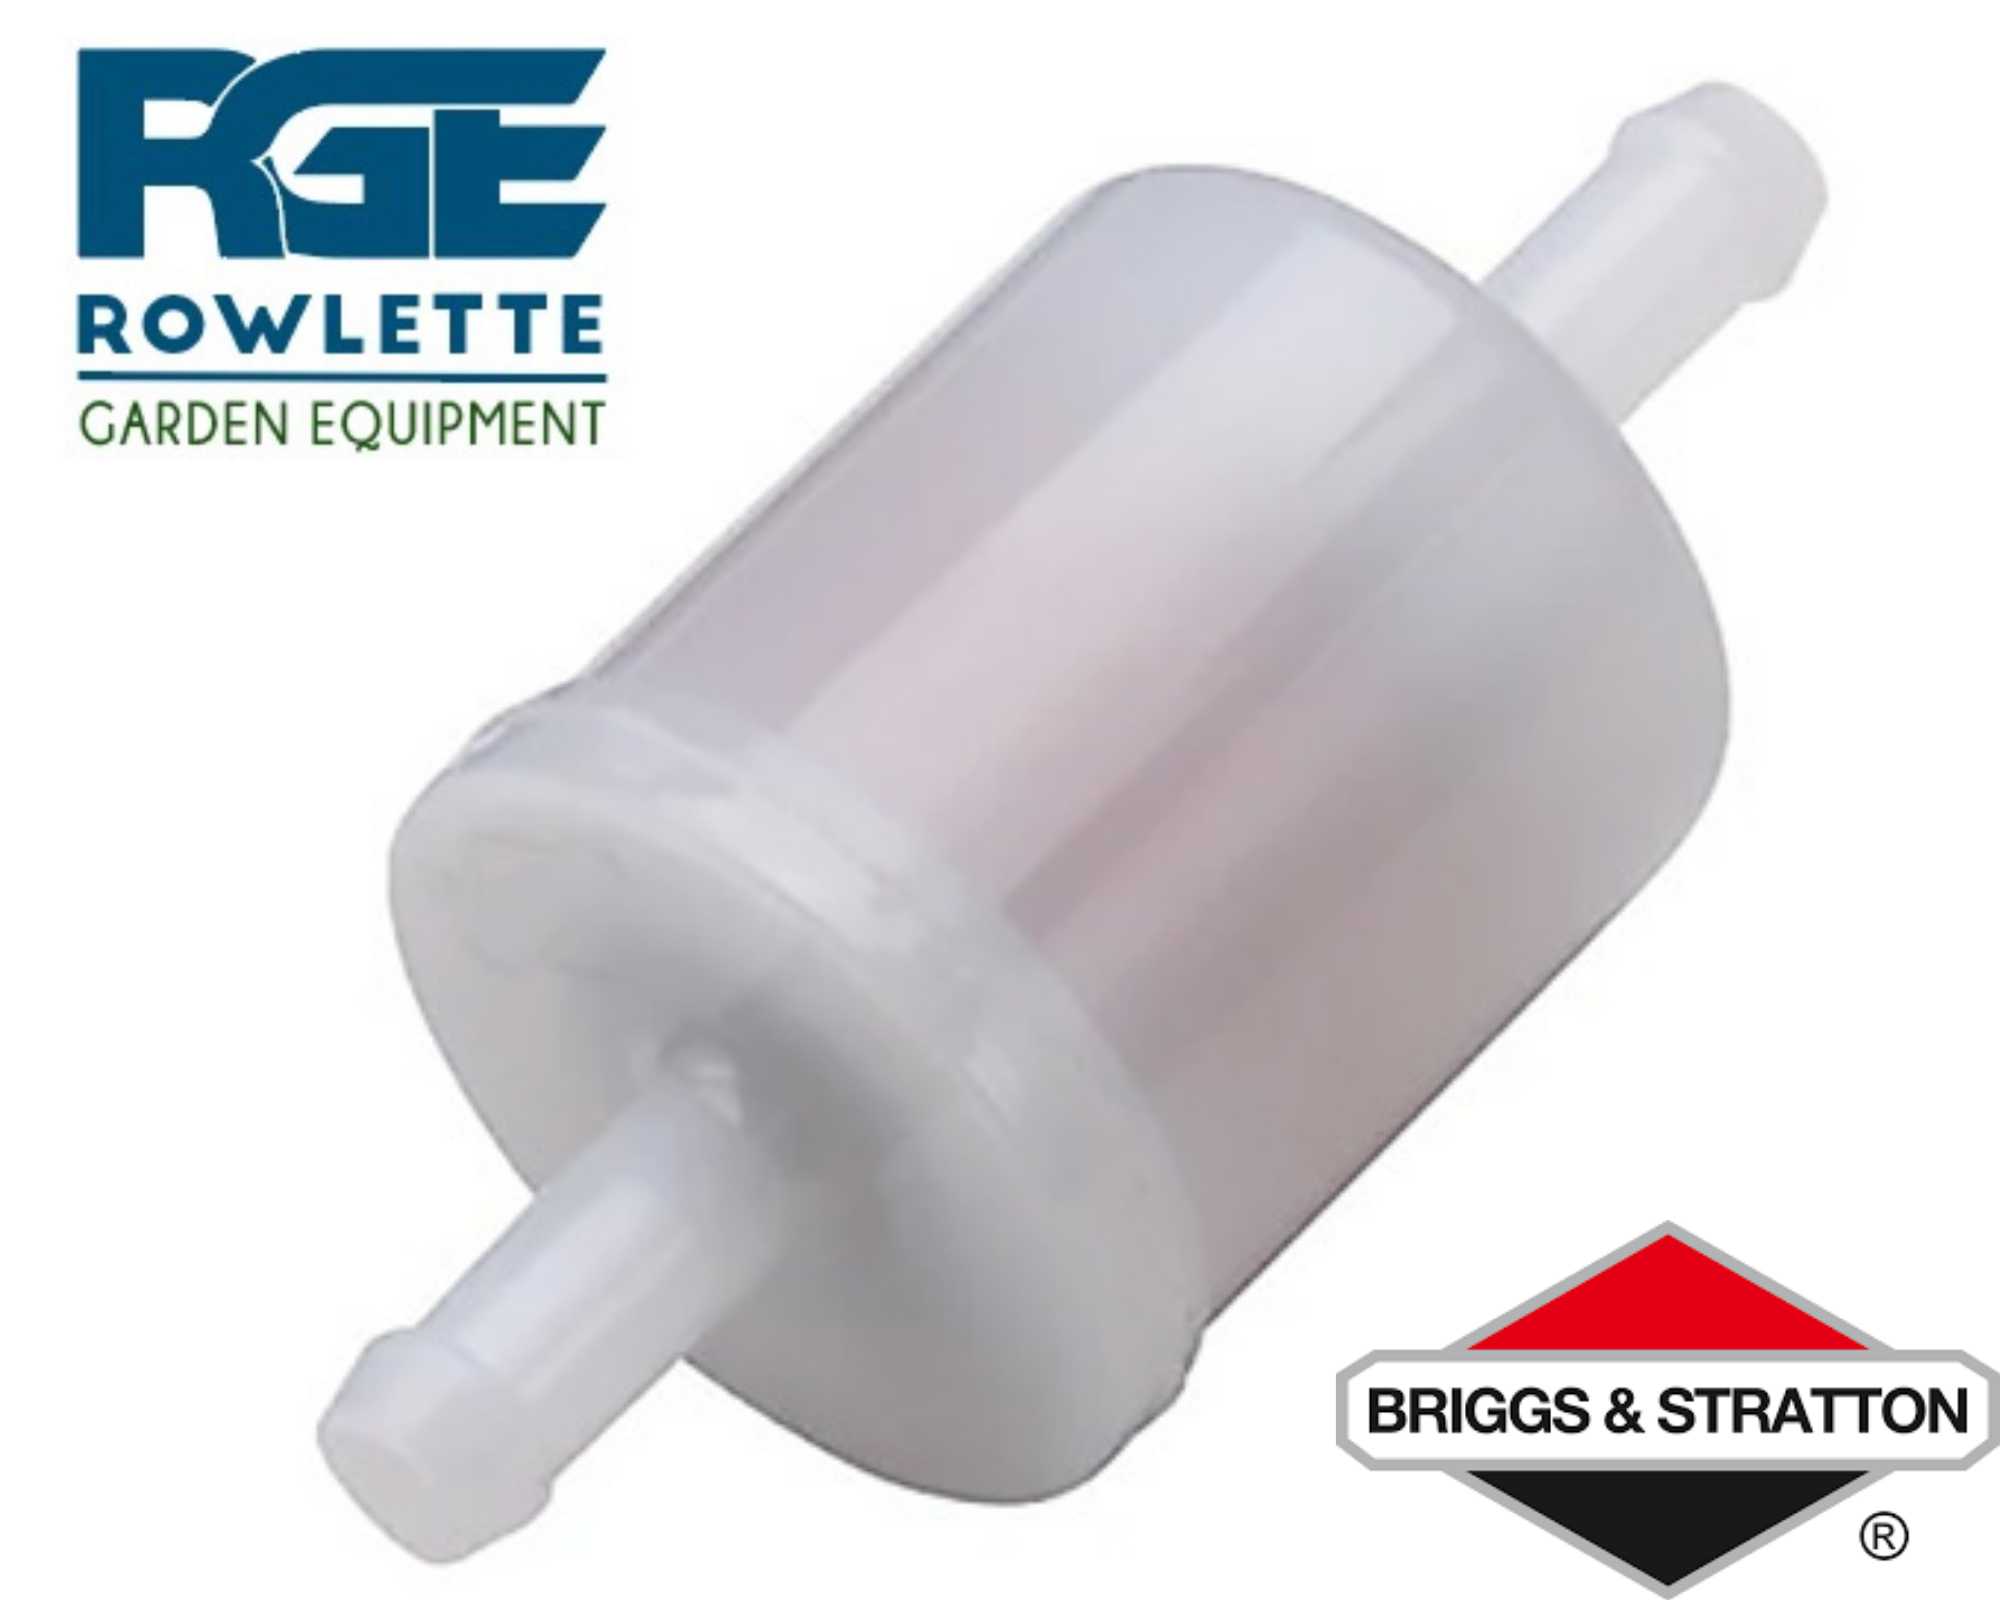 Briggs & Stratton Pump Fed Engines fuel Filter